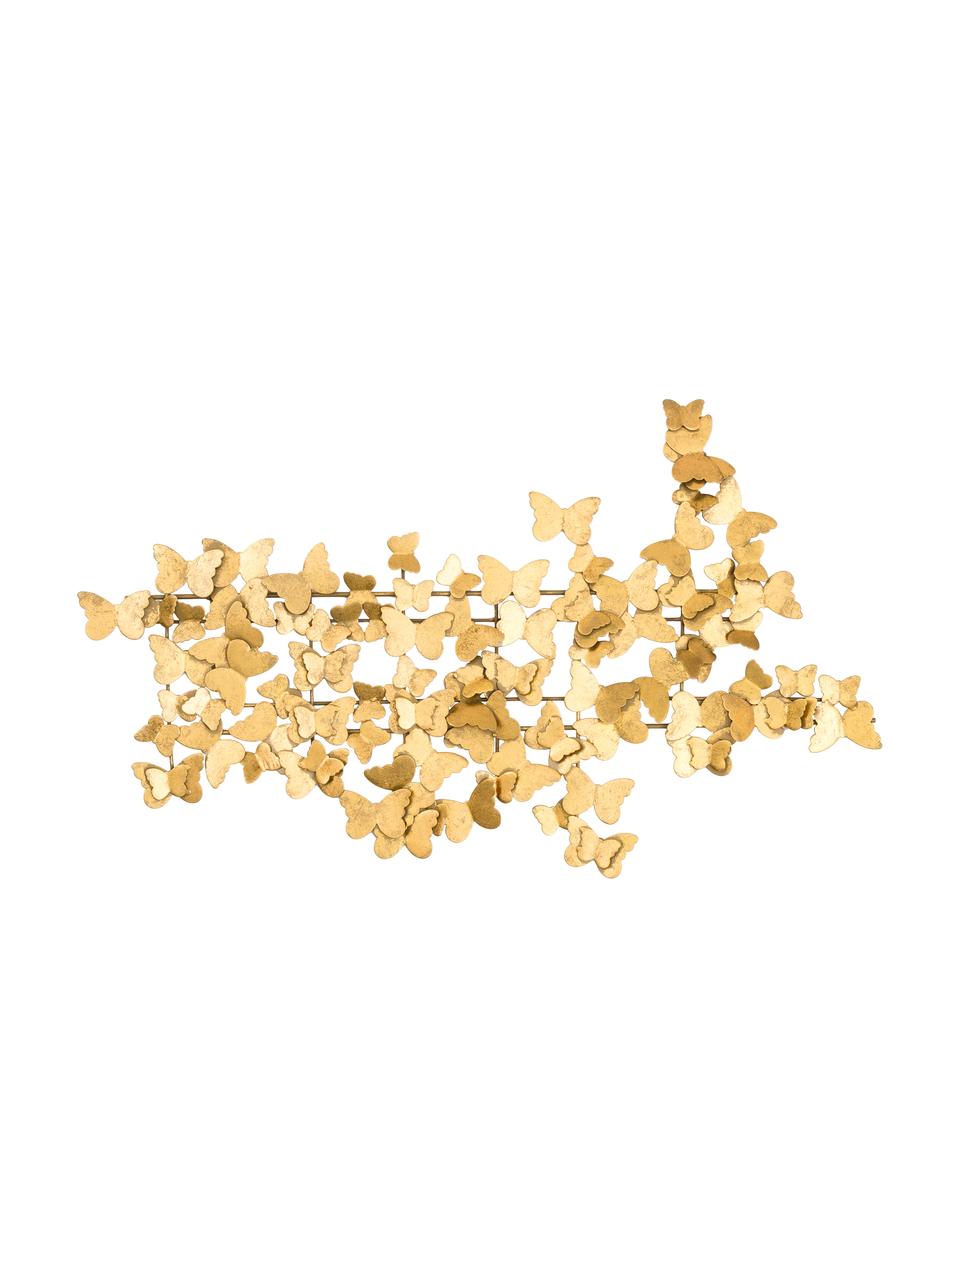 Wandobjekt Butterfly aus Metall in Antik-Optik, Metall, Goldfarben, 104 x 62 cm